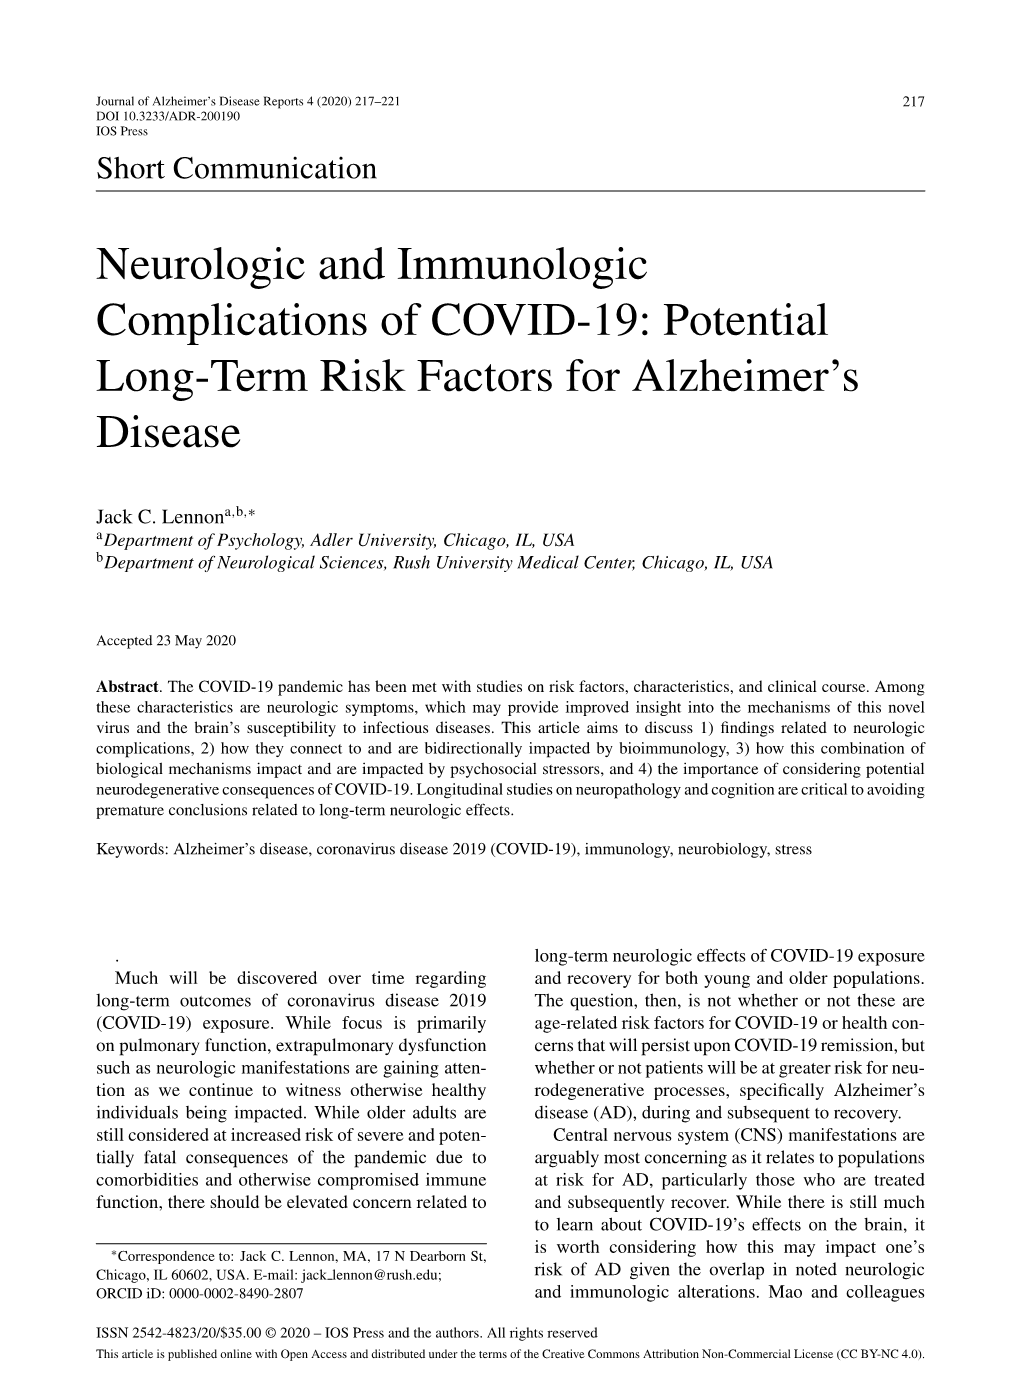 Potential Long-Term Risk Factors for Alzheimer's Disease